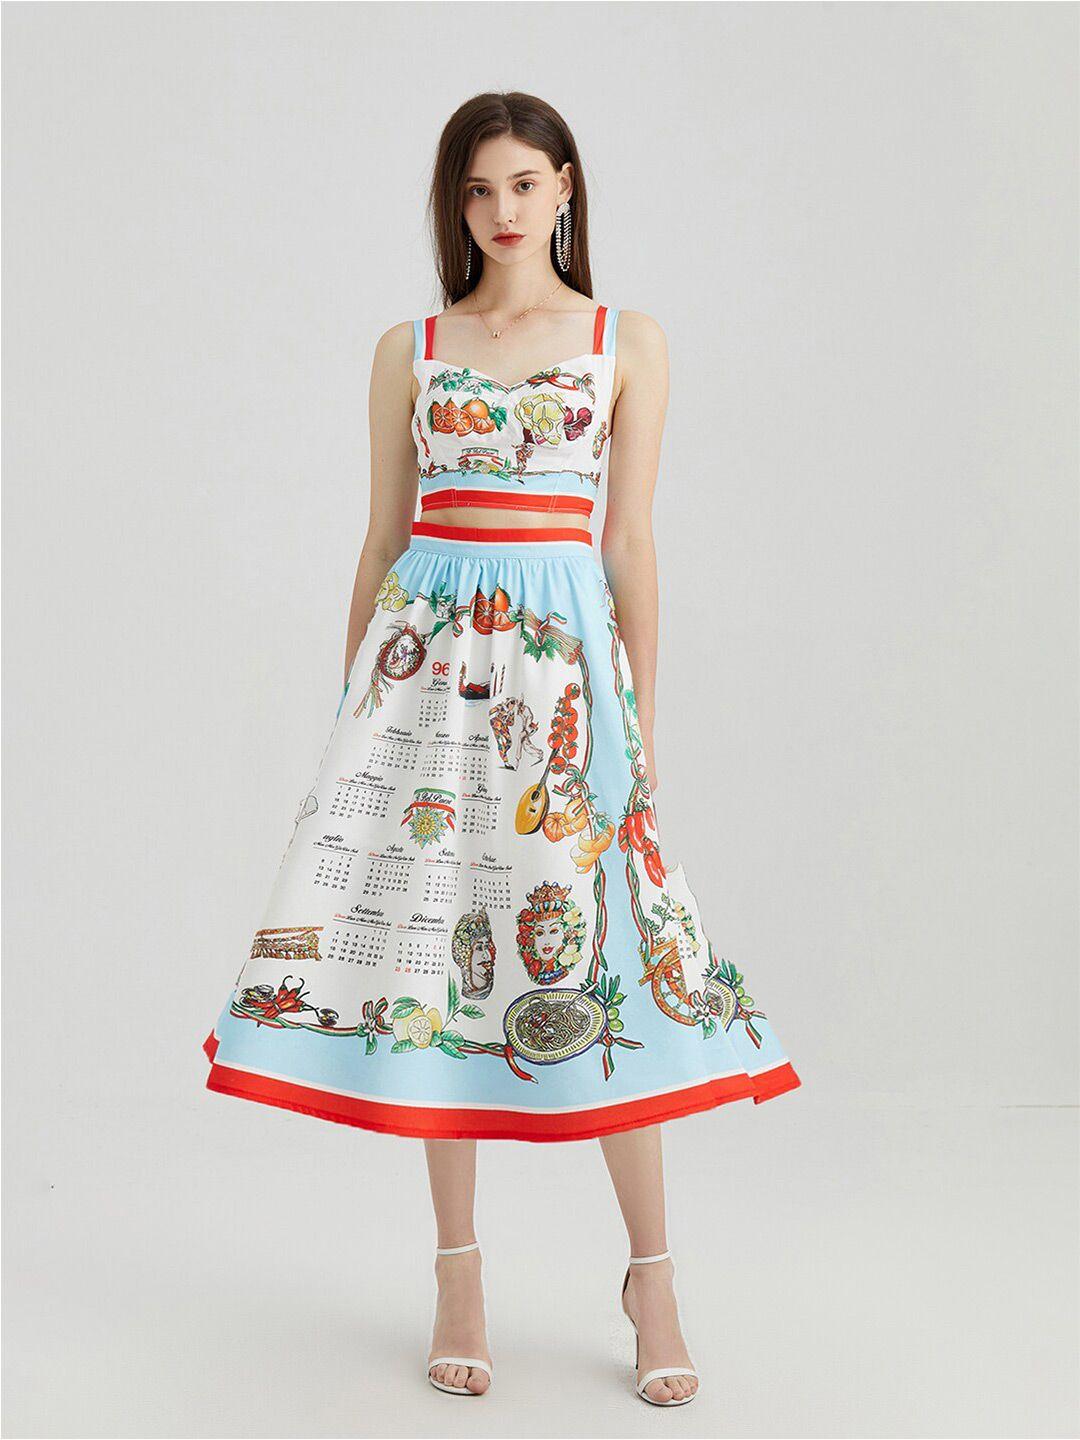 jc collection conversation printed crop top & a-line skirt